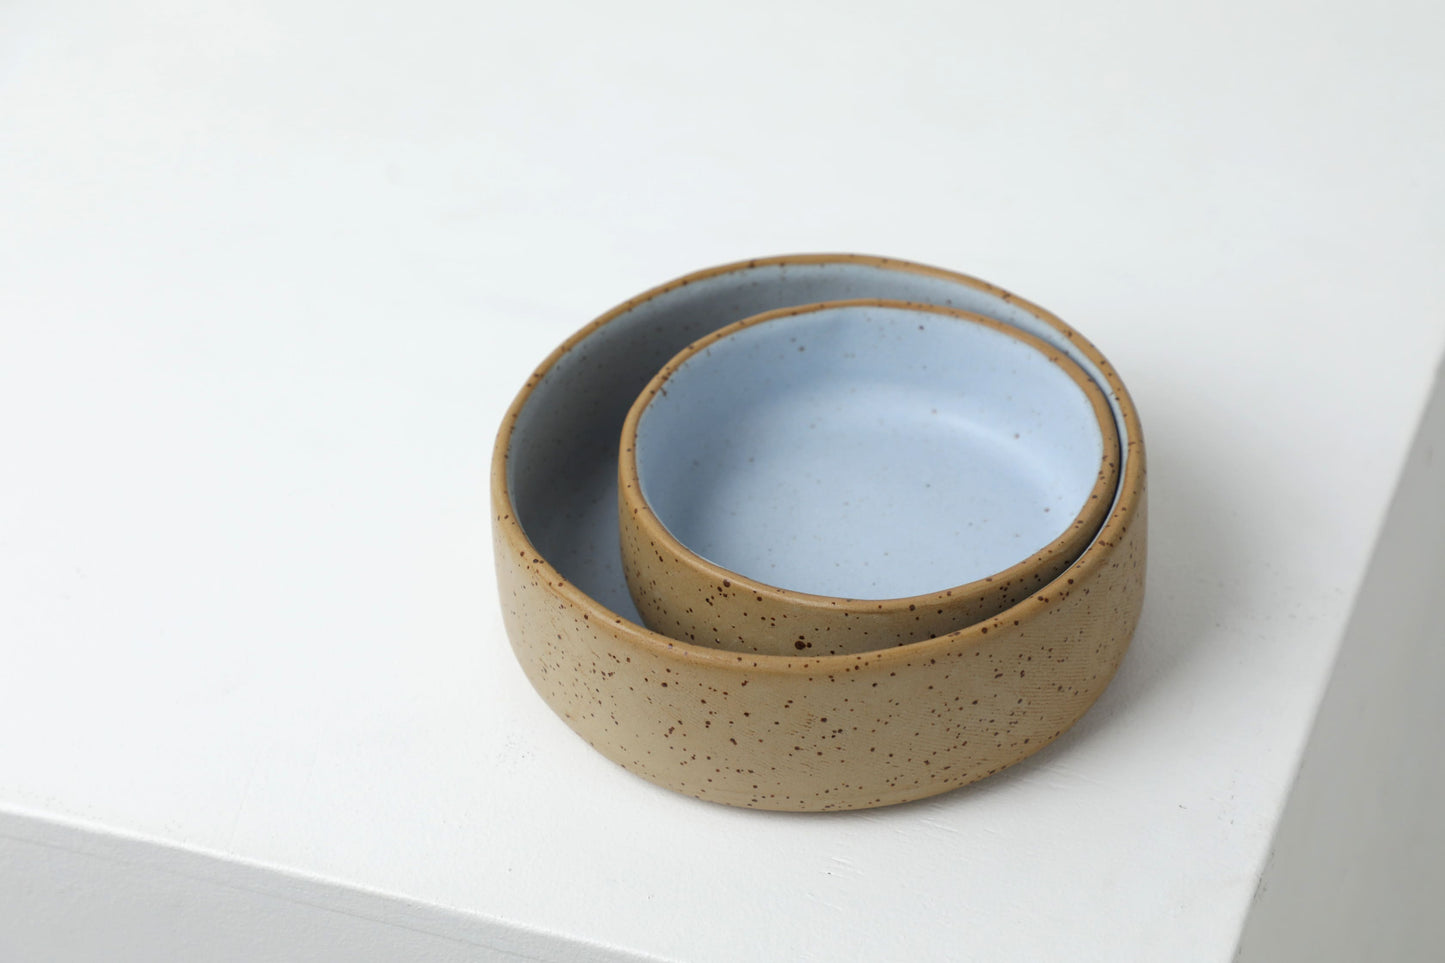 Handmade ceramic dog bowls | RAW+SKY BLUE - premium dog goods handmade in Europe by My Wild Other